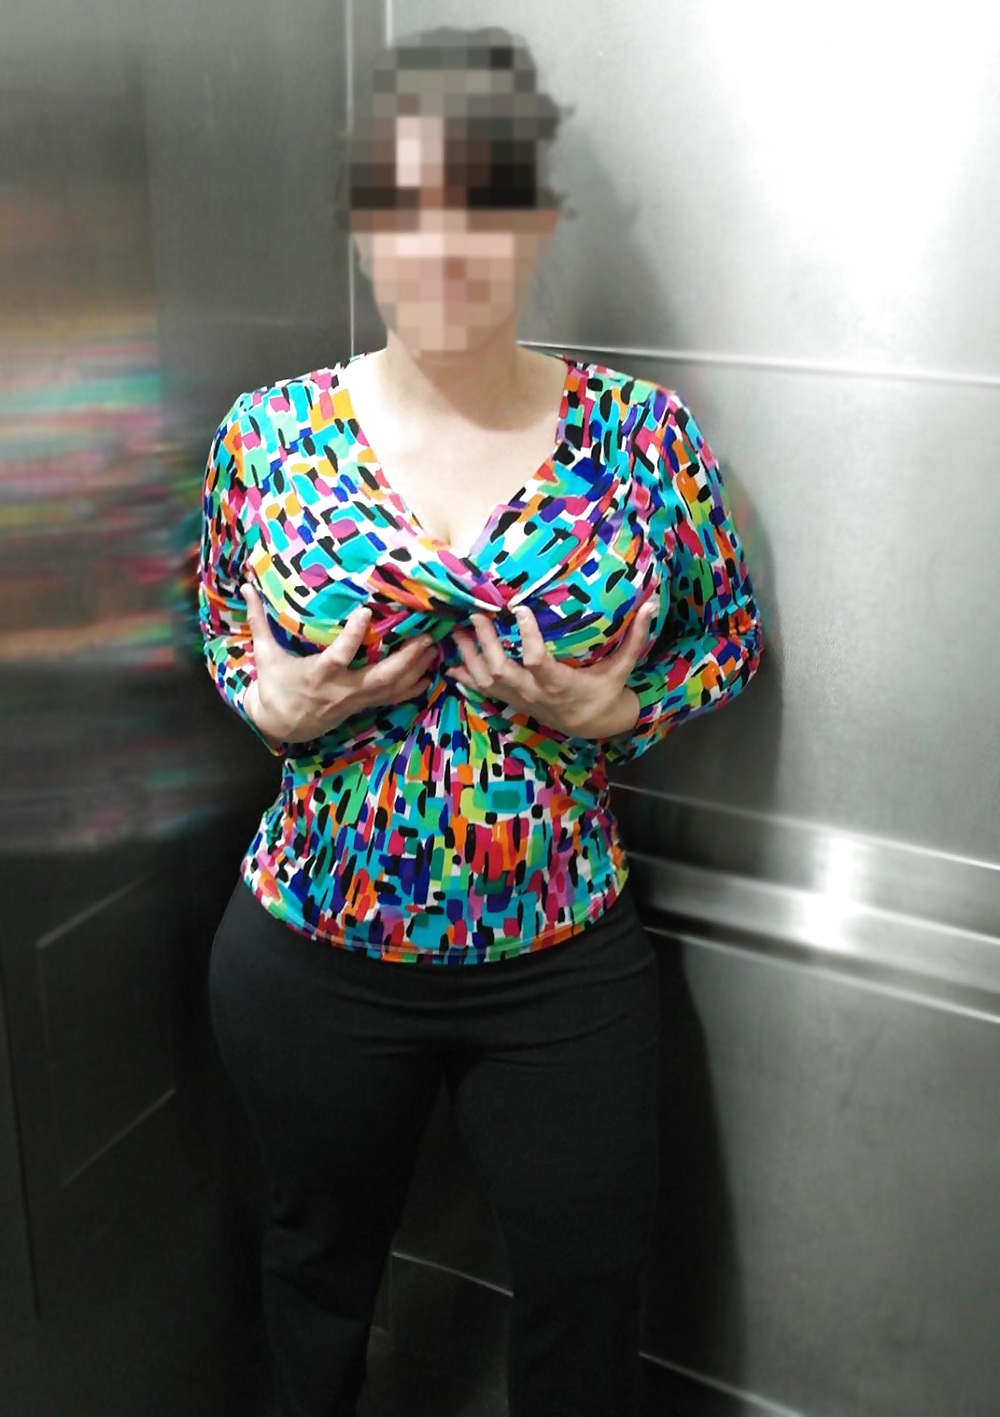 Mom flashing her blue bra in elevator #21610991